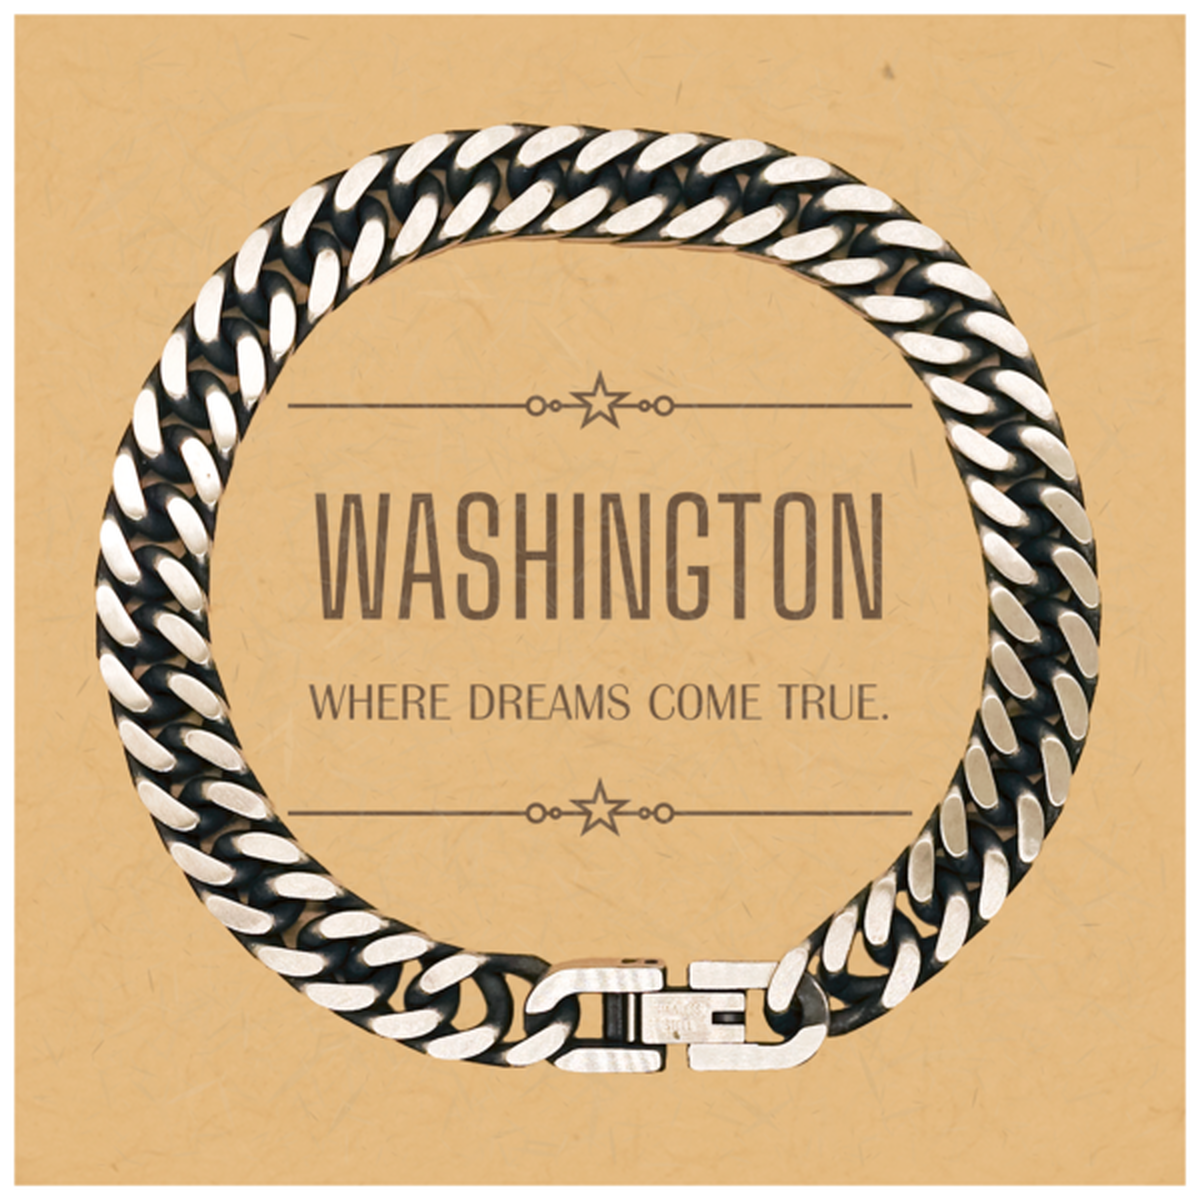 Love Washington State Cuban Link Chain Bracelet, Washington Where dreams come true, Birthday Christmas Inspirational Gifts For Washington Men, Women, Friends